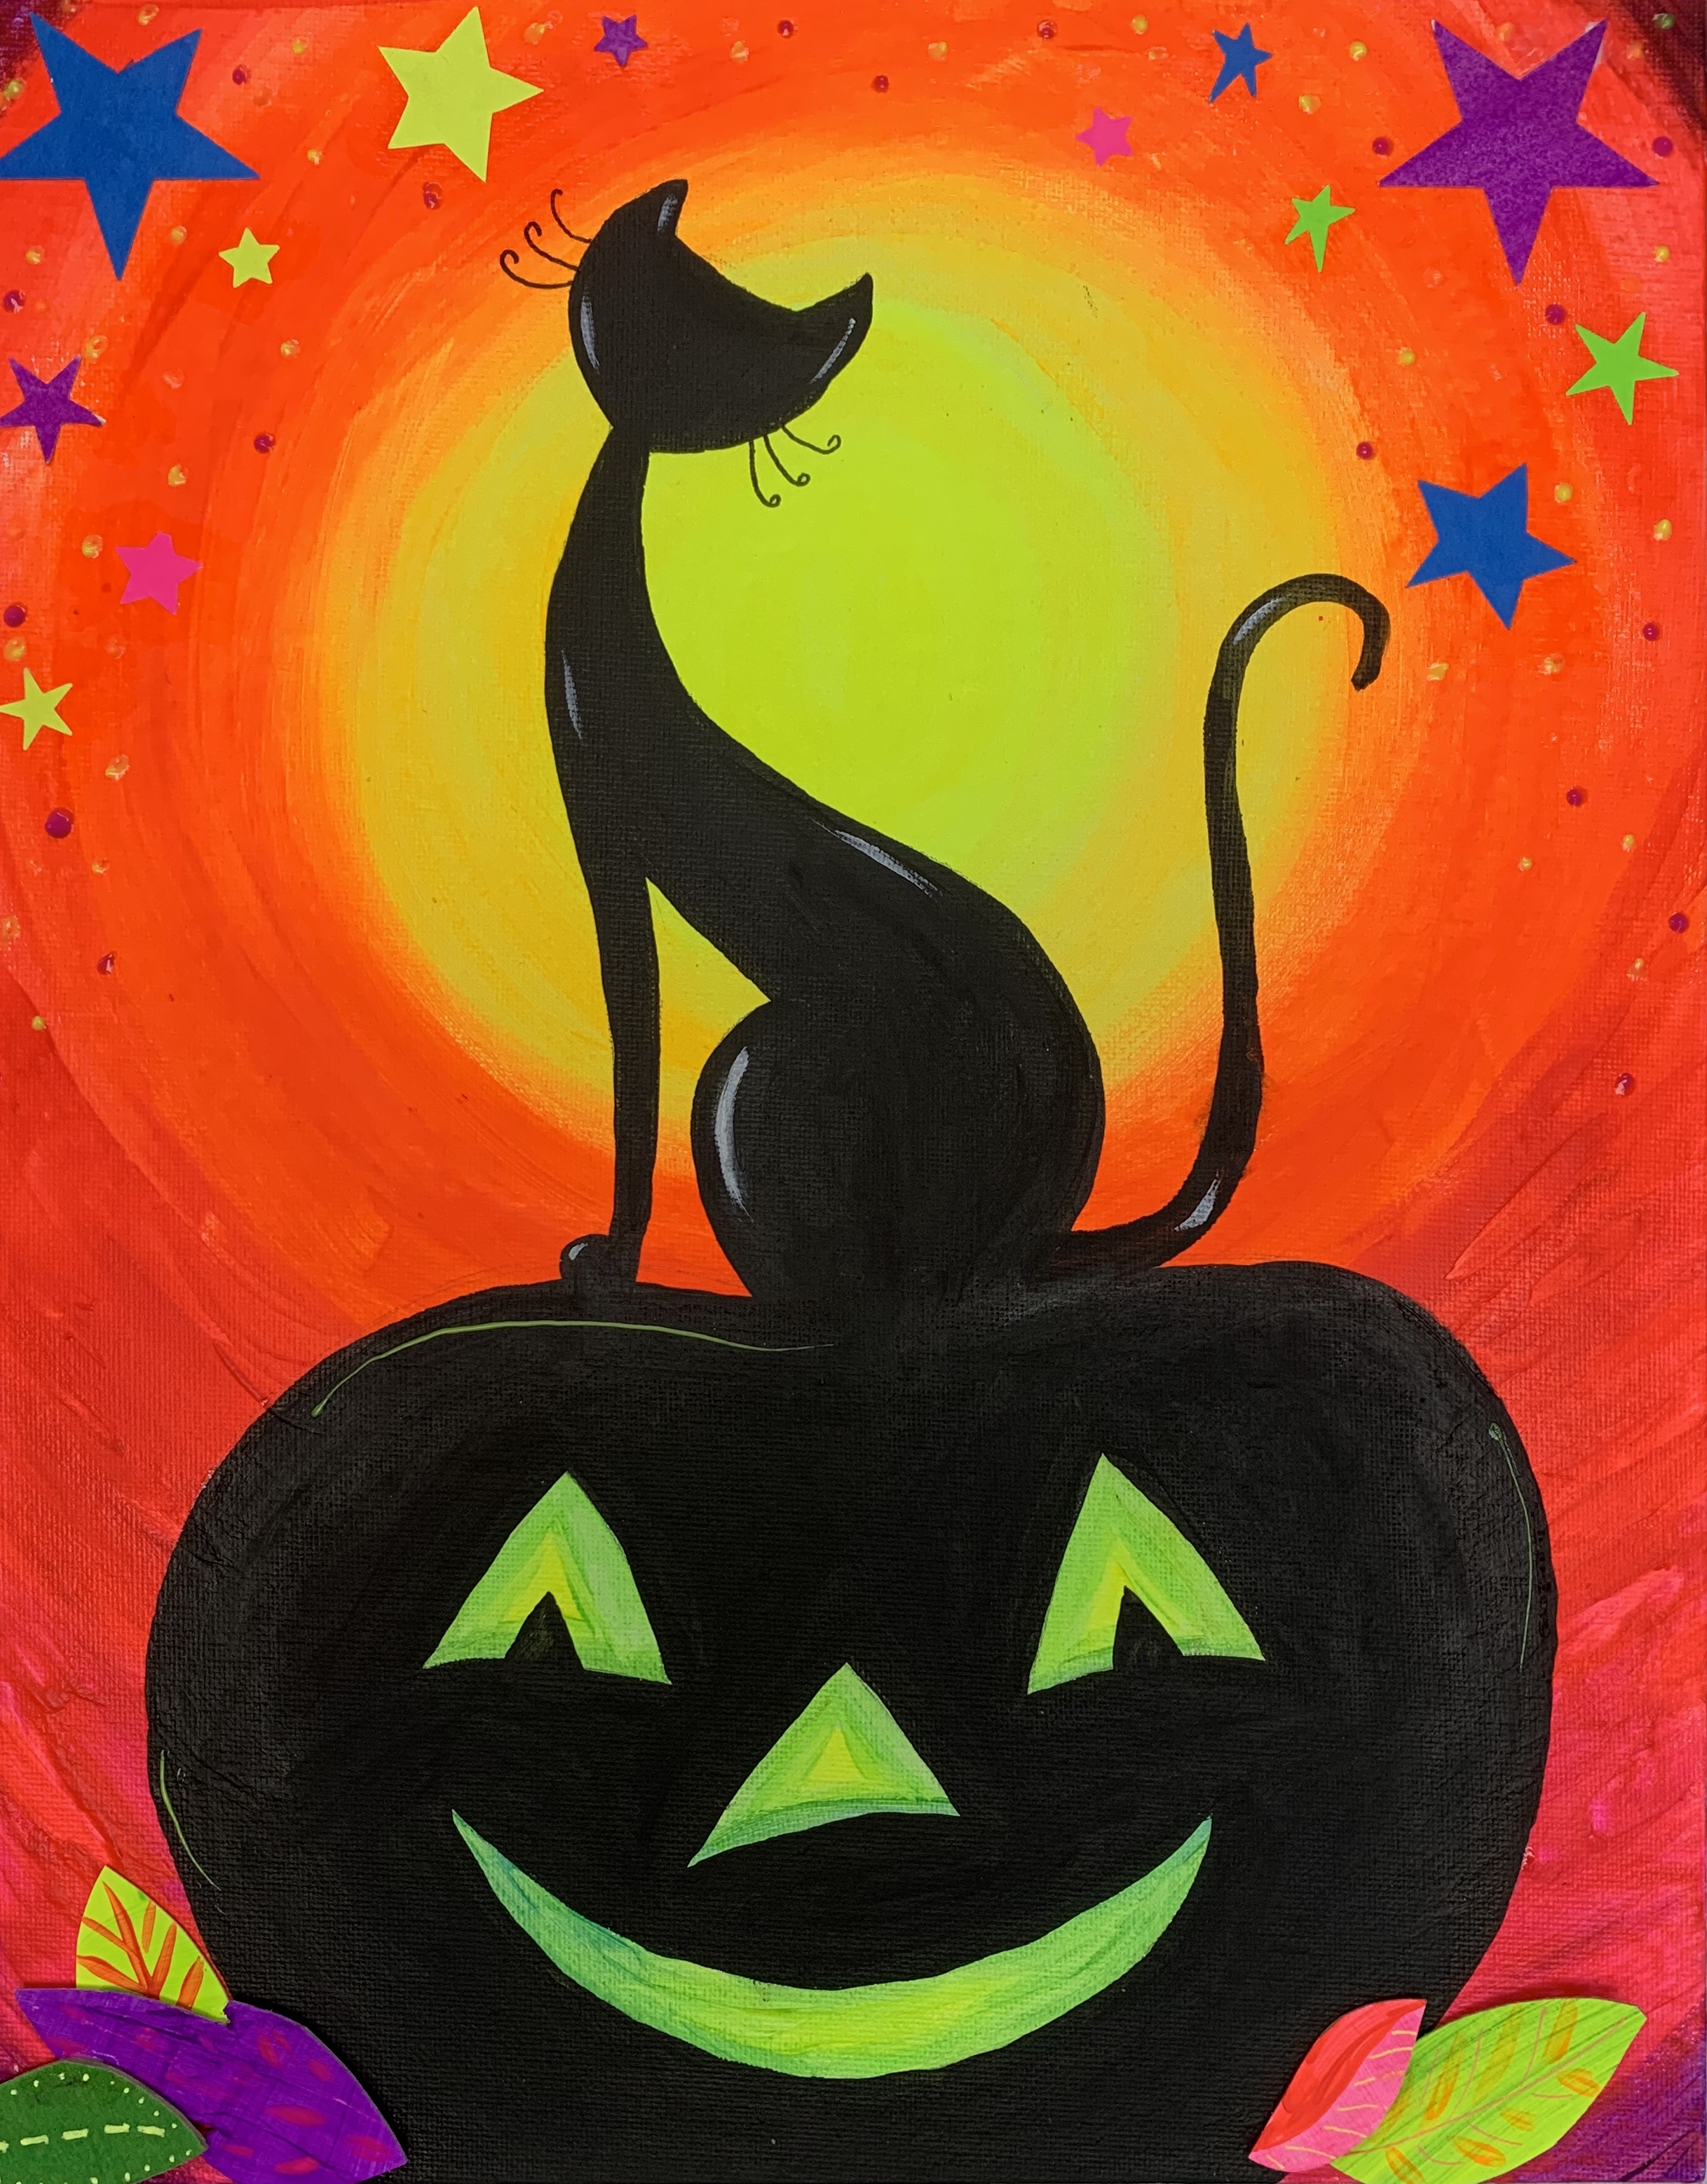 11 x 14 Neon Cat on Pumpkin silhouette